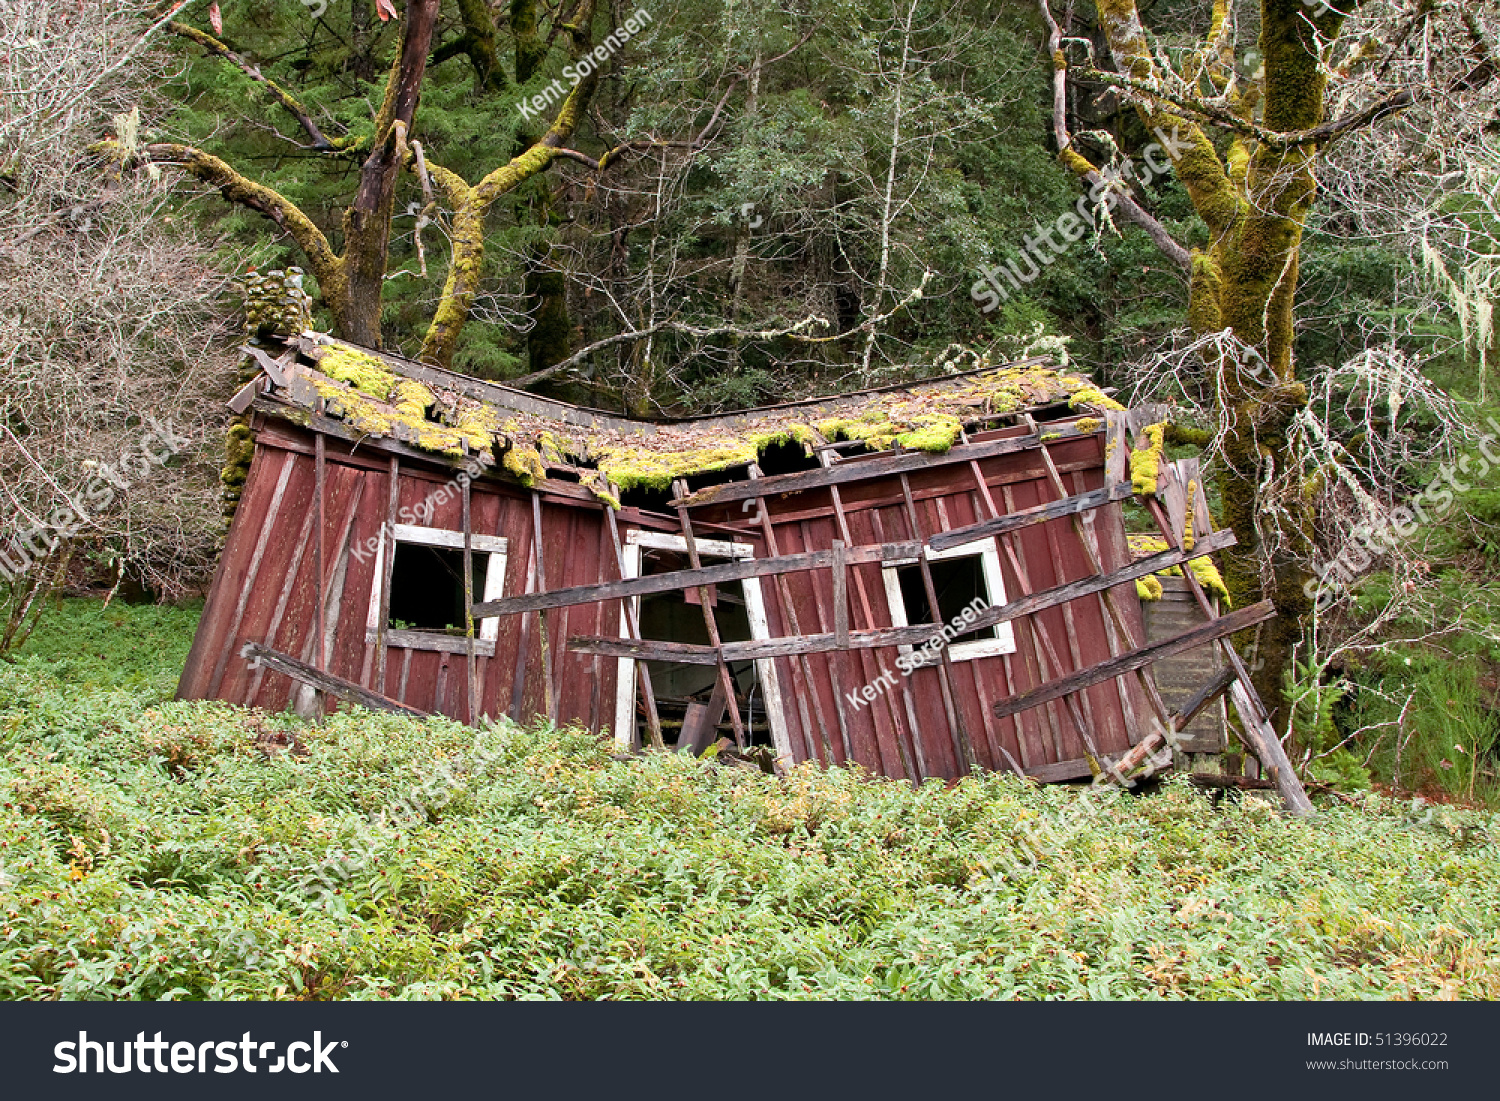 stock-photo-dilapidated-house-in-mendocino-county-california-51396022.jpg